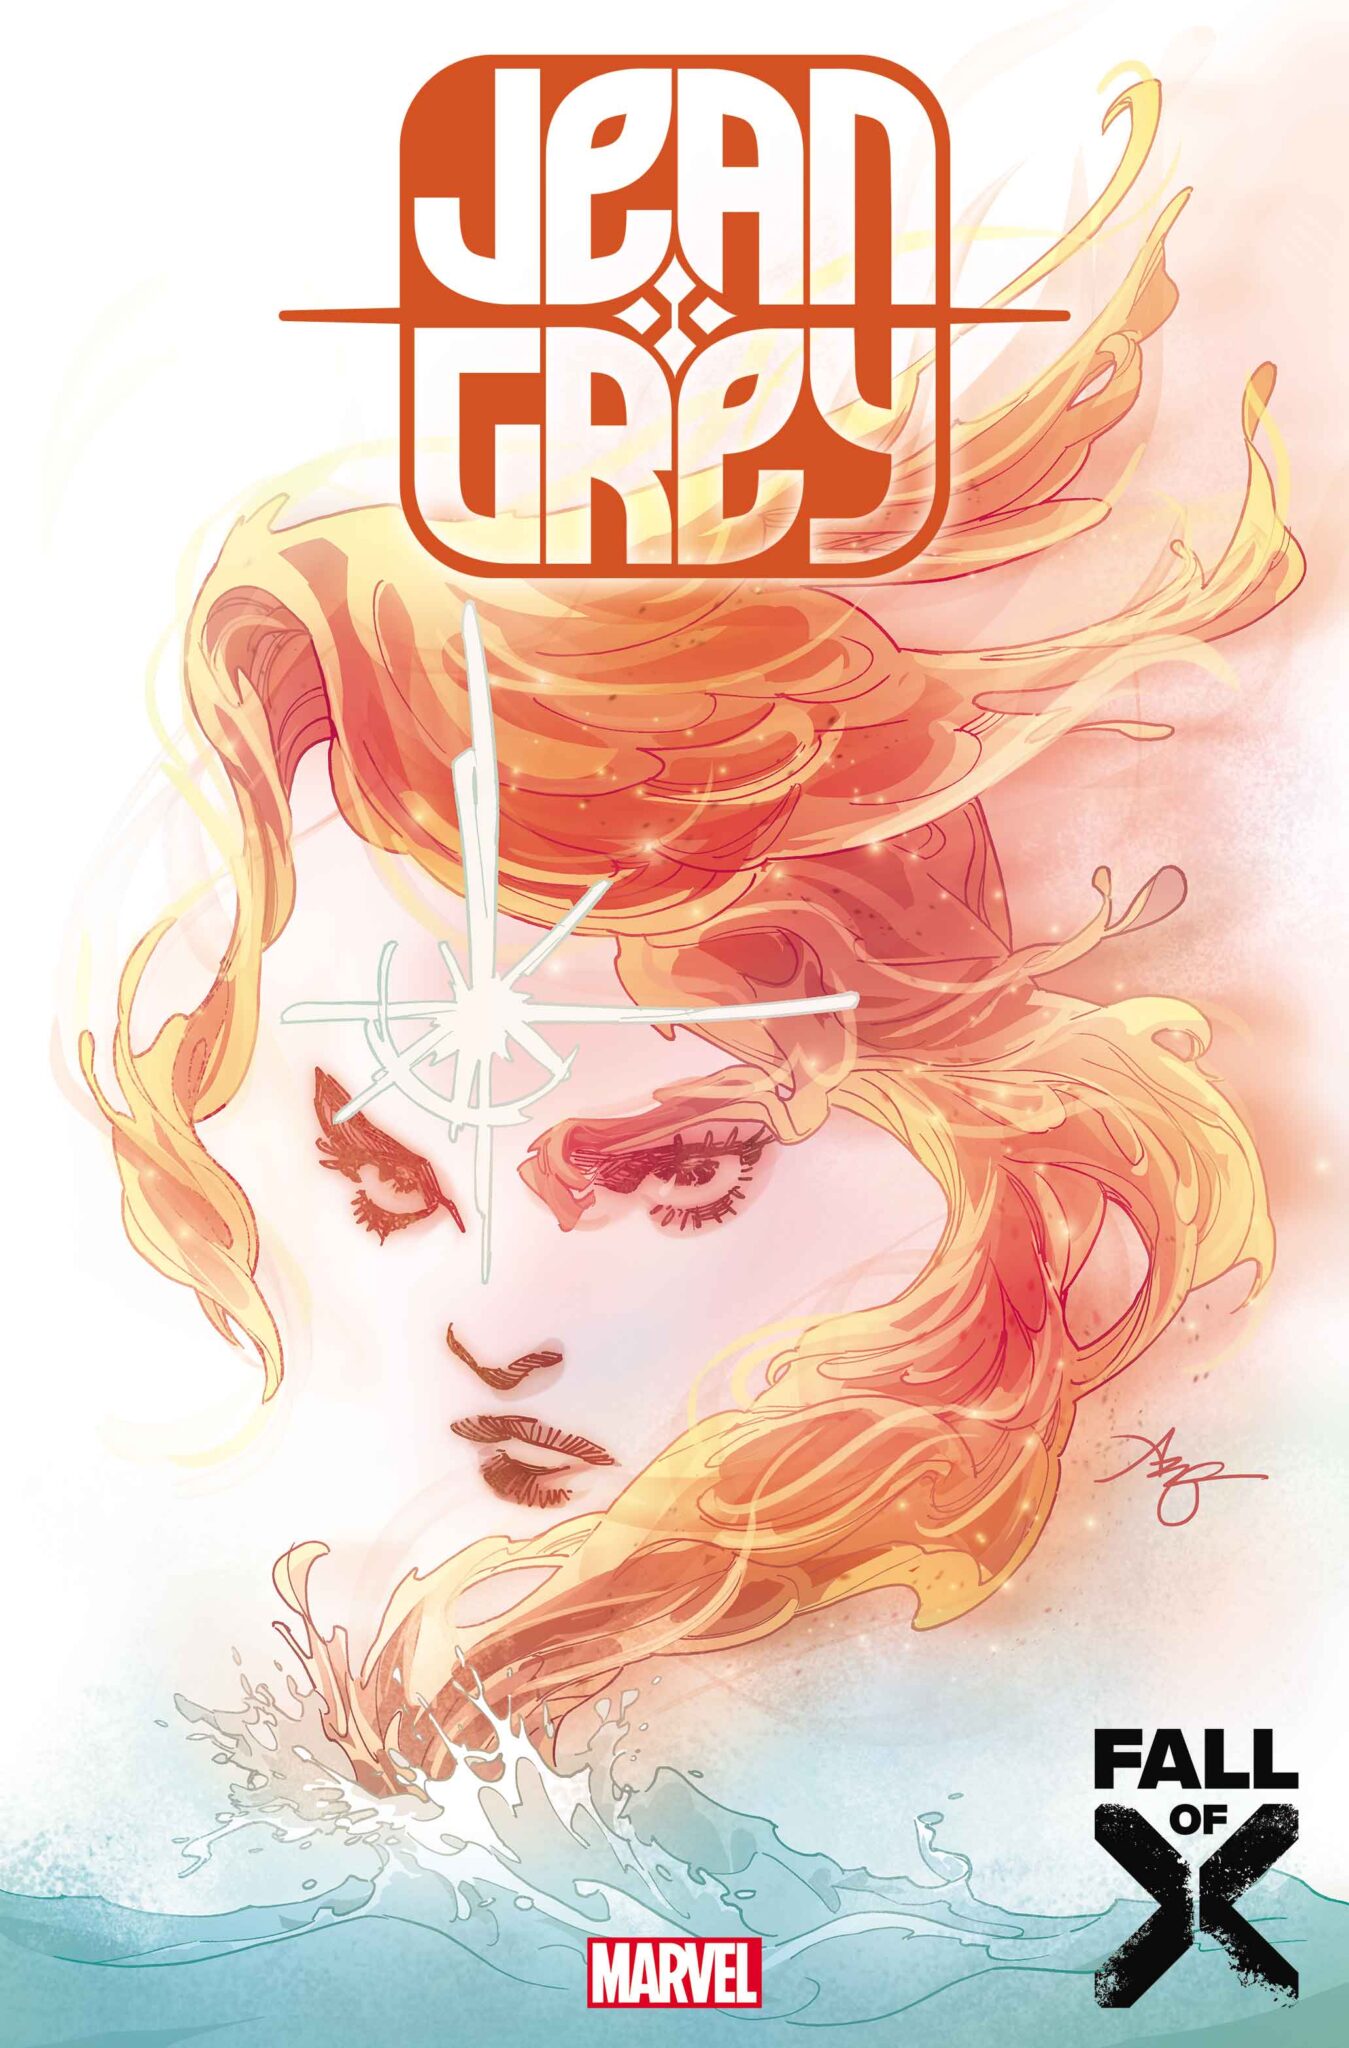 Jean Grey #1 cover